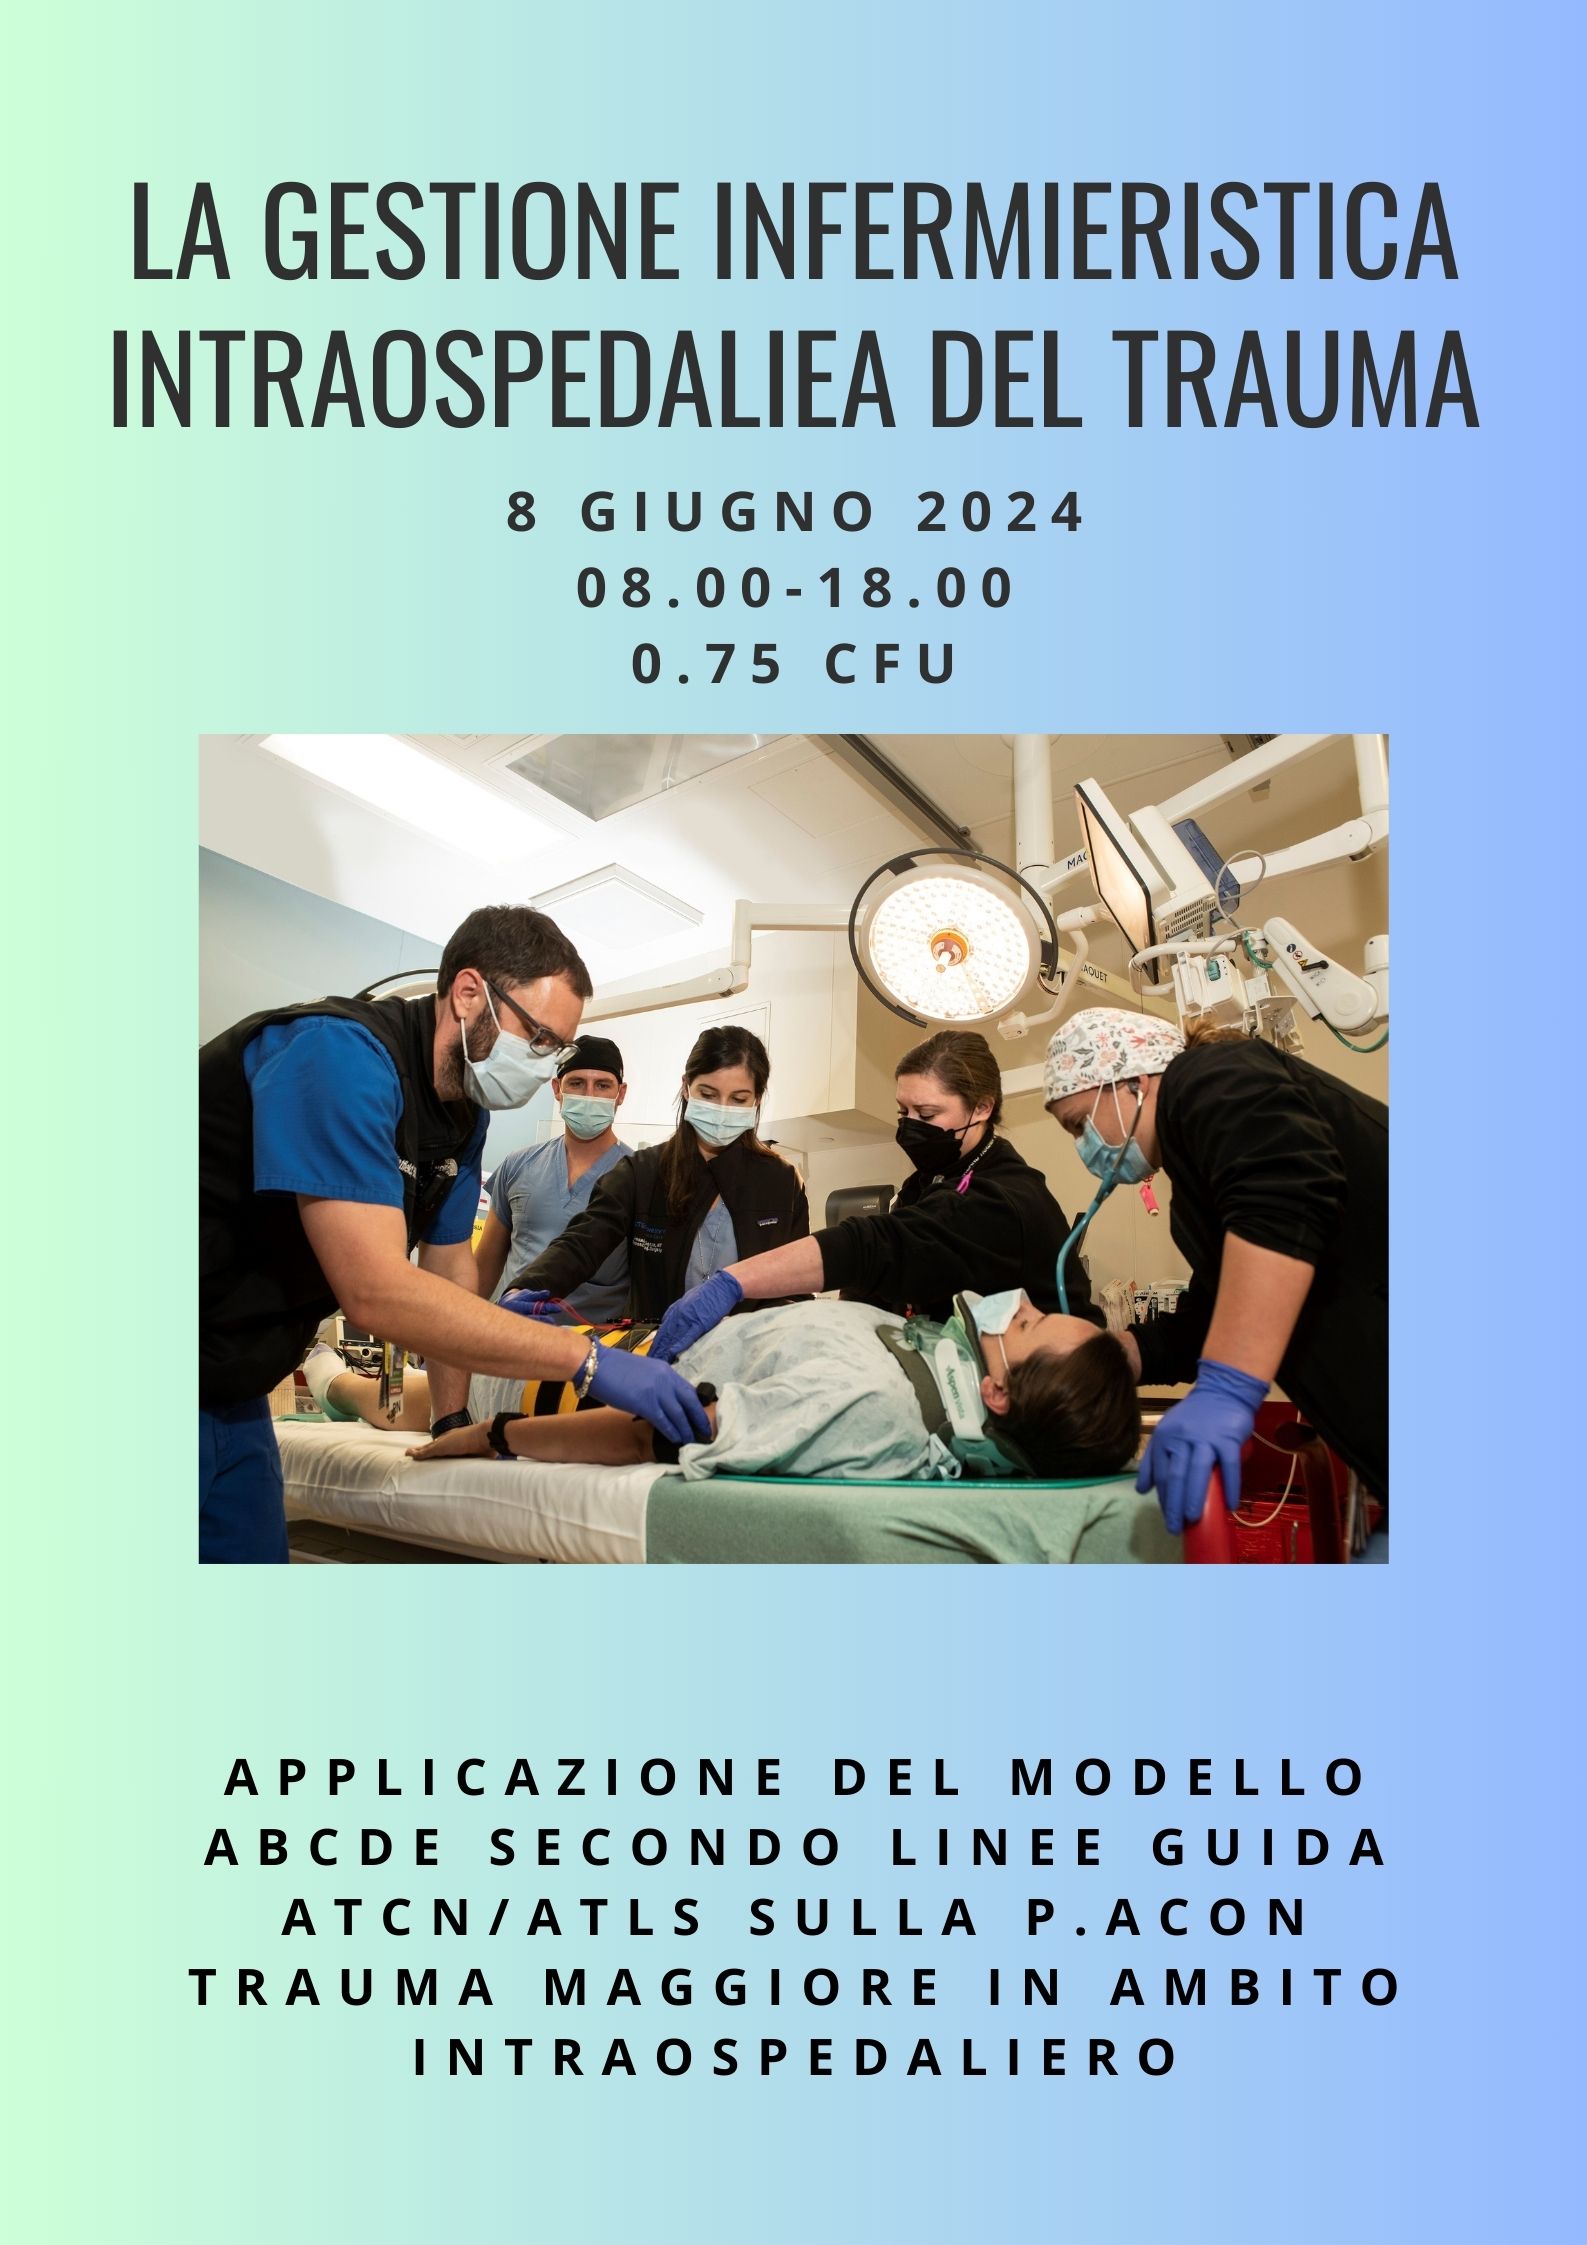 upload_la_gestione_infermieristica_intraospedaliero_del_trauma.jpg